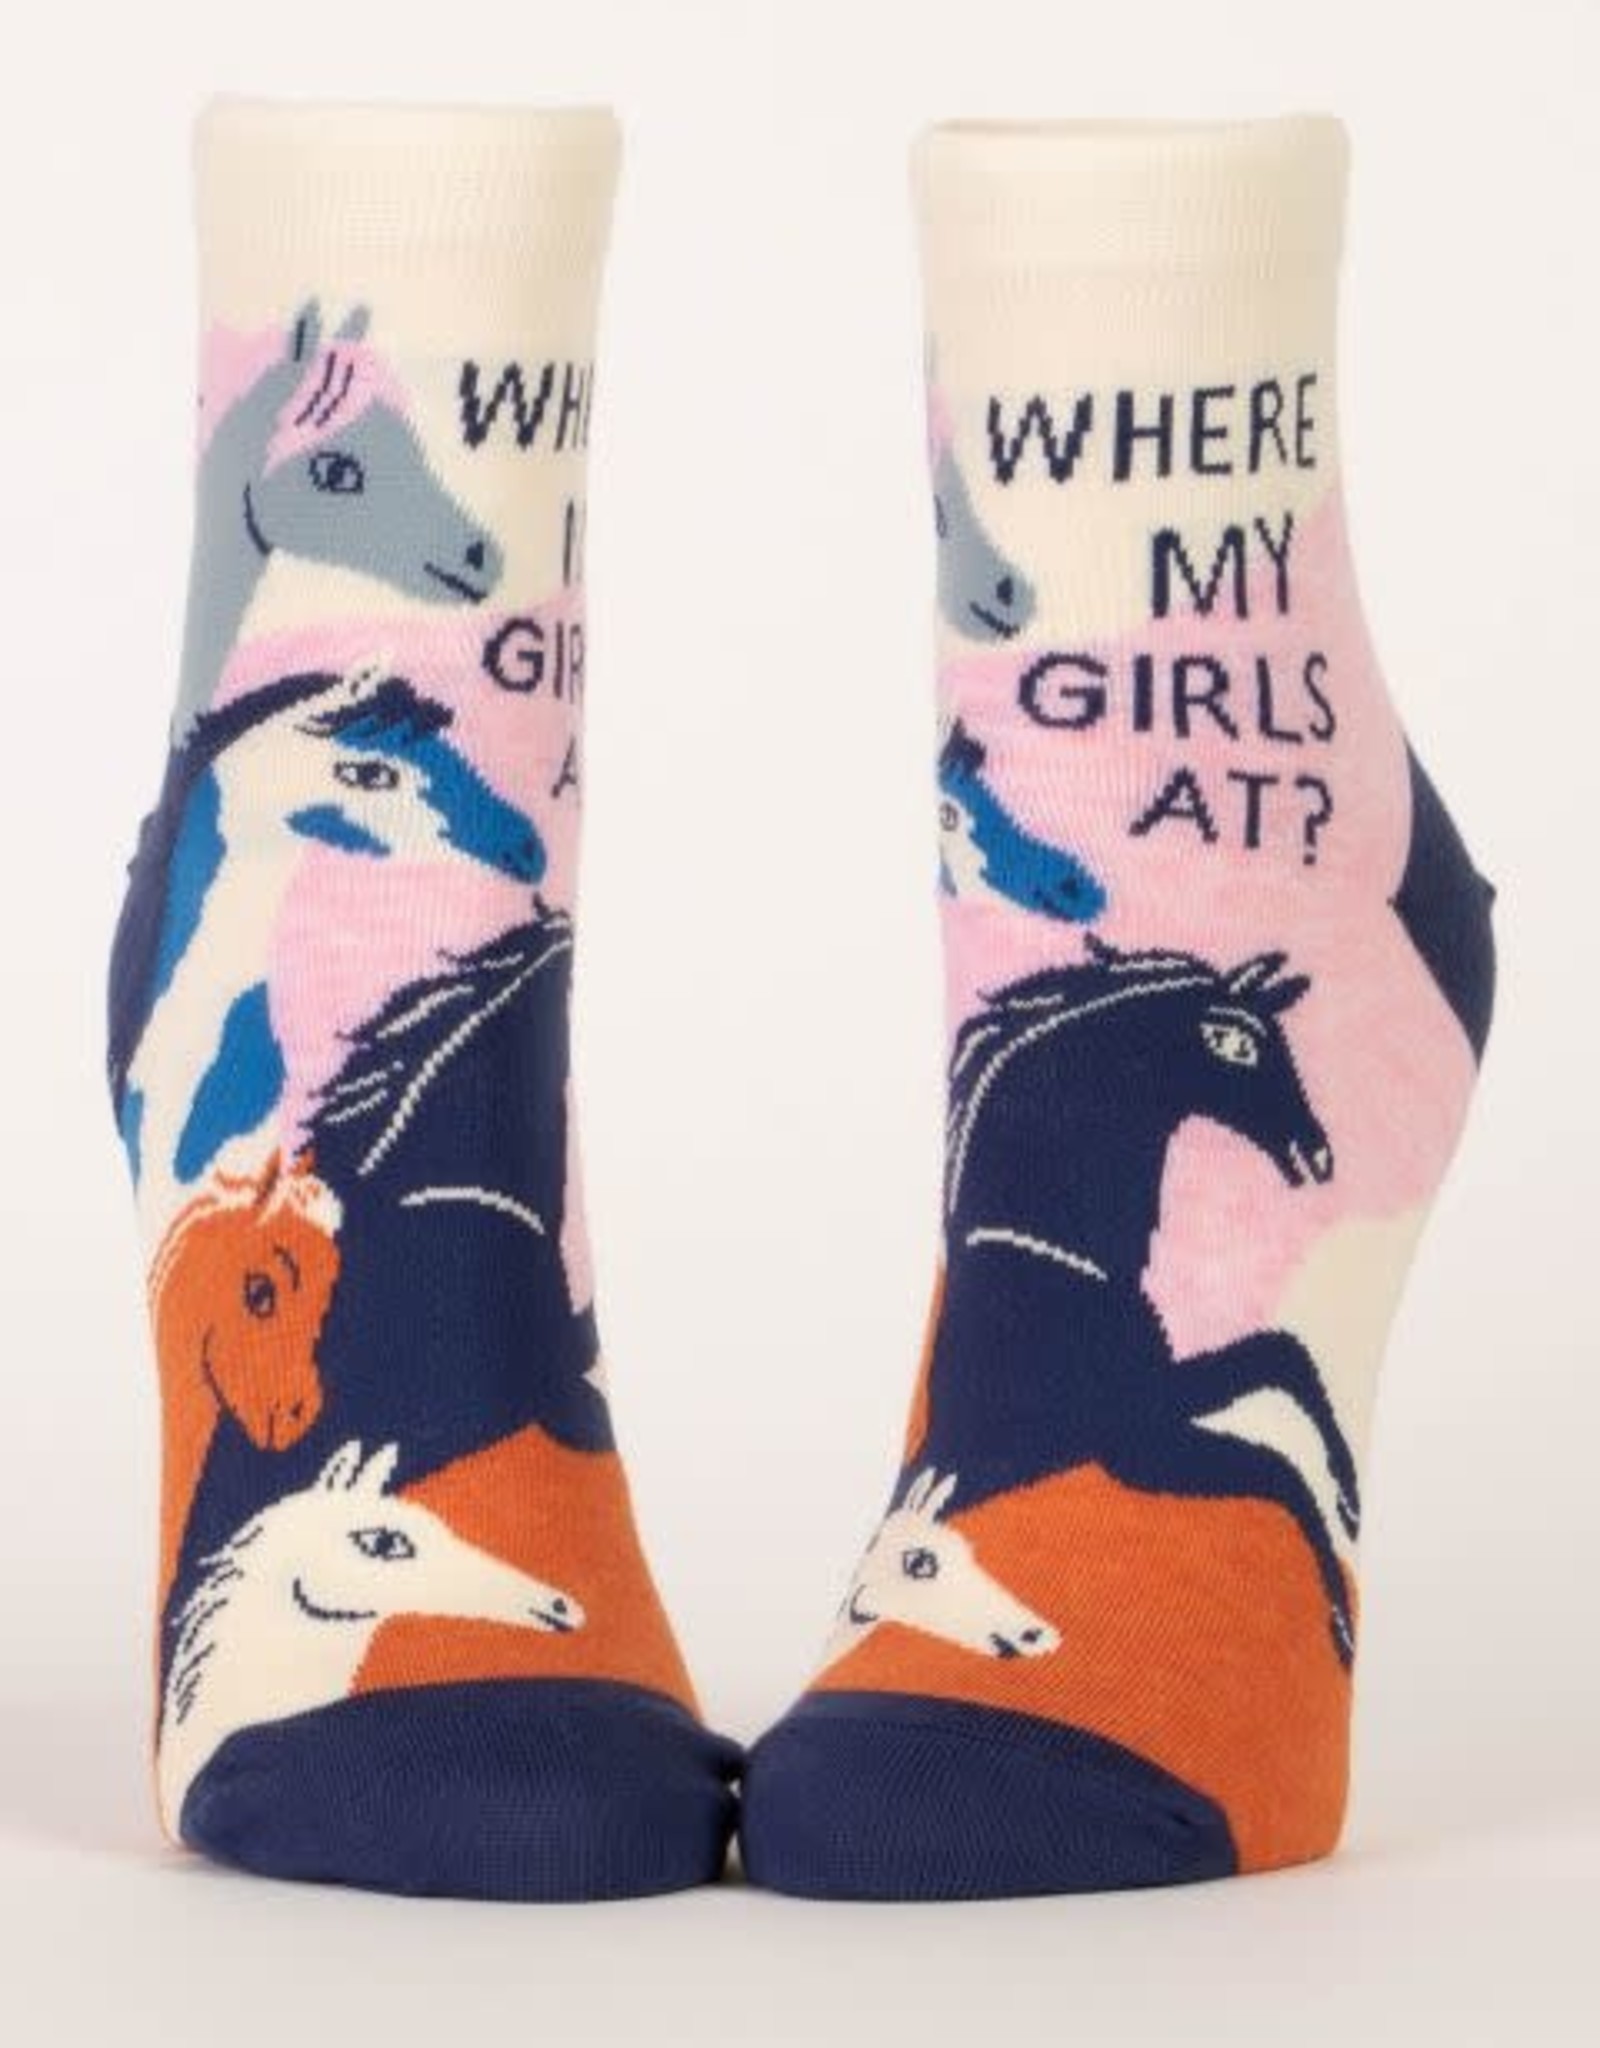 Blue Q Women’s ankle Socks Where my Girls at?